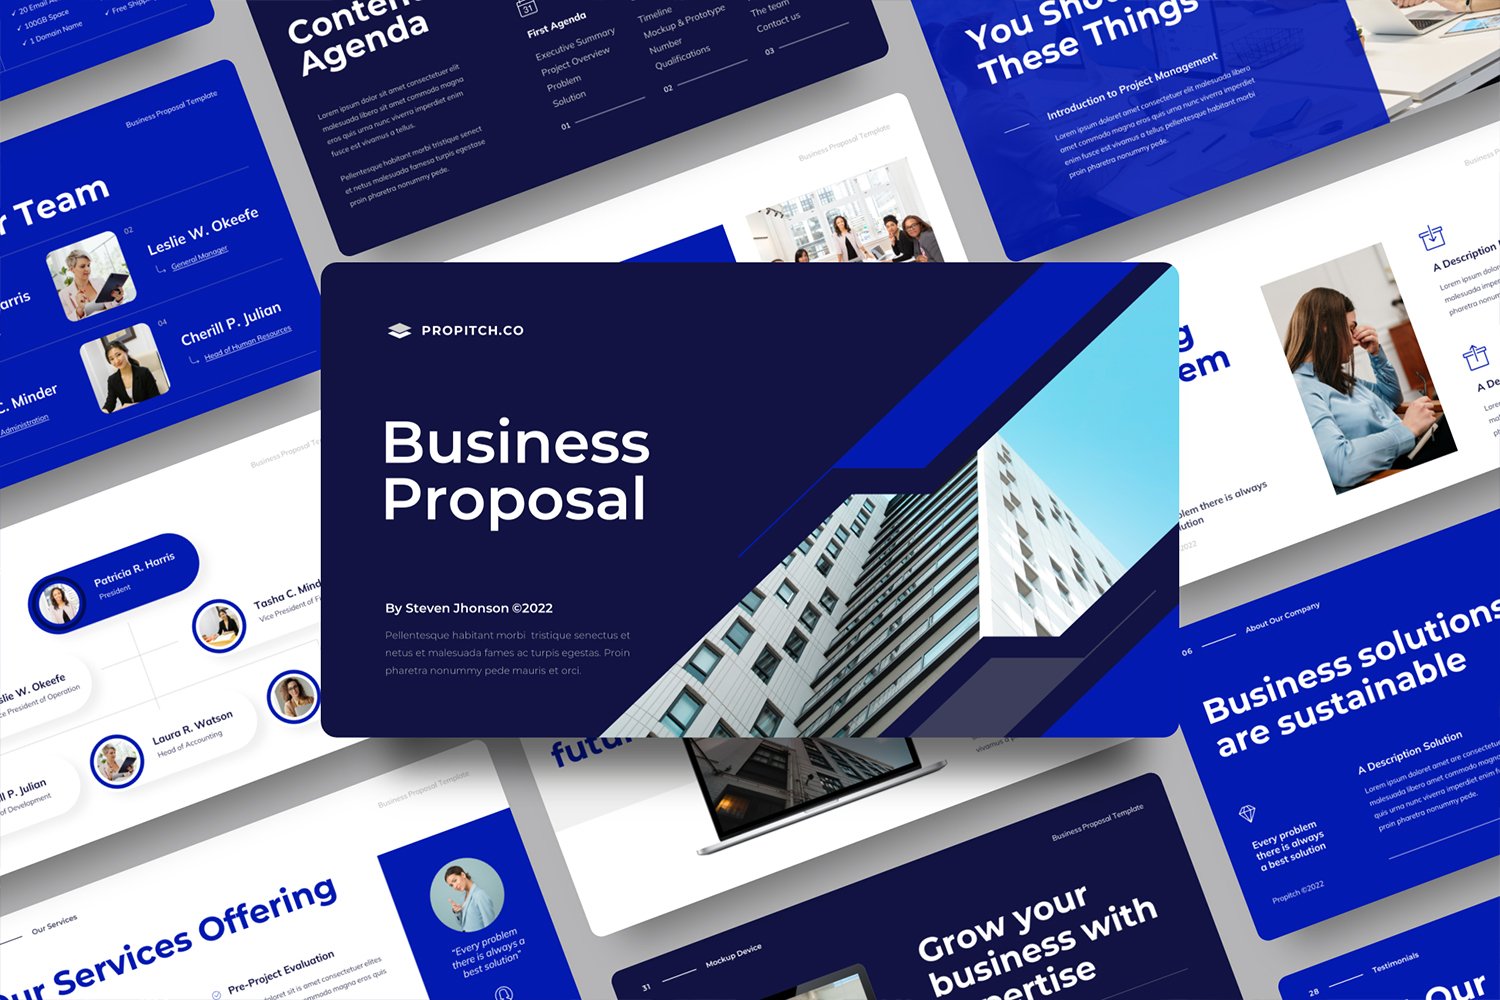 Propitch - Business Proposal Google Slide Template